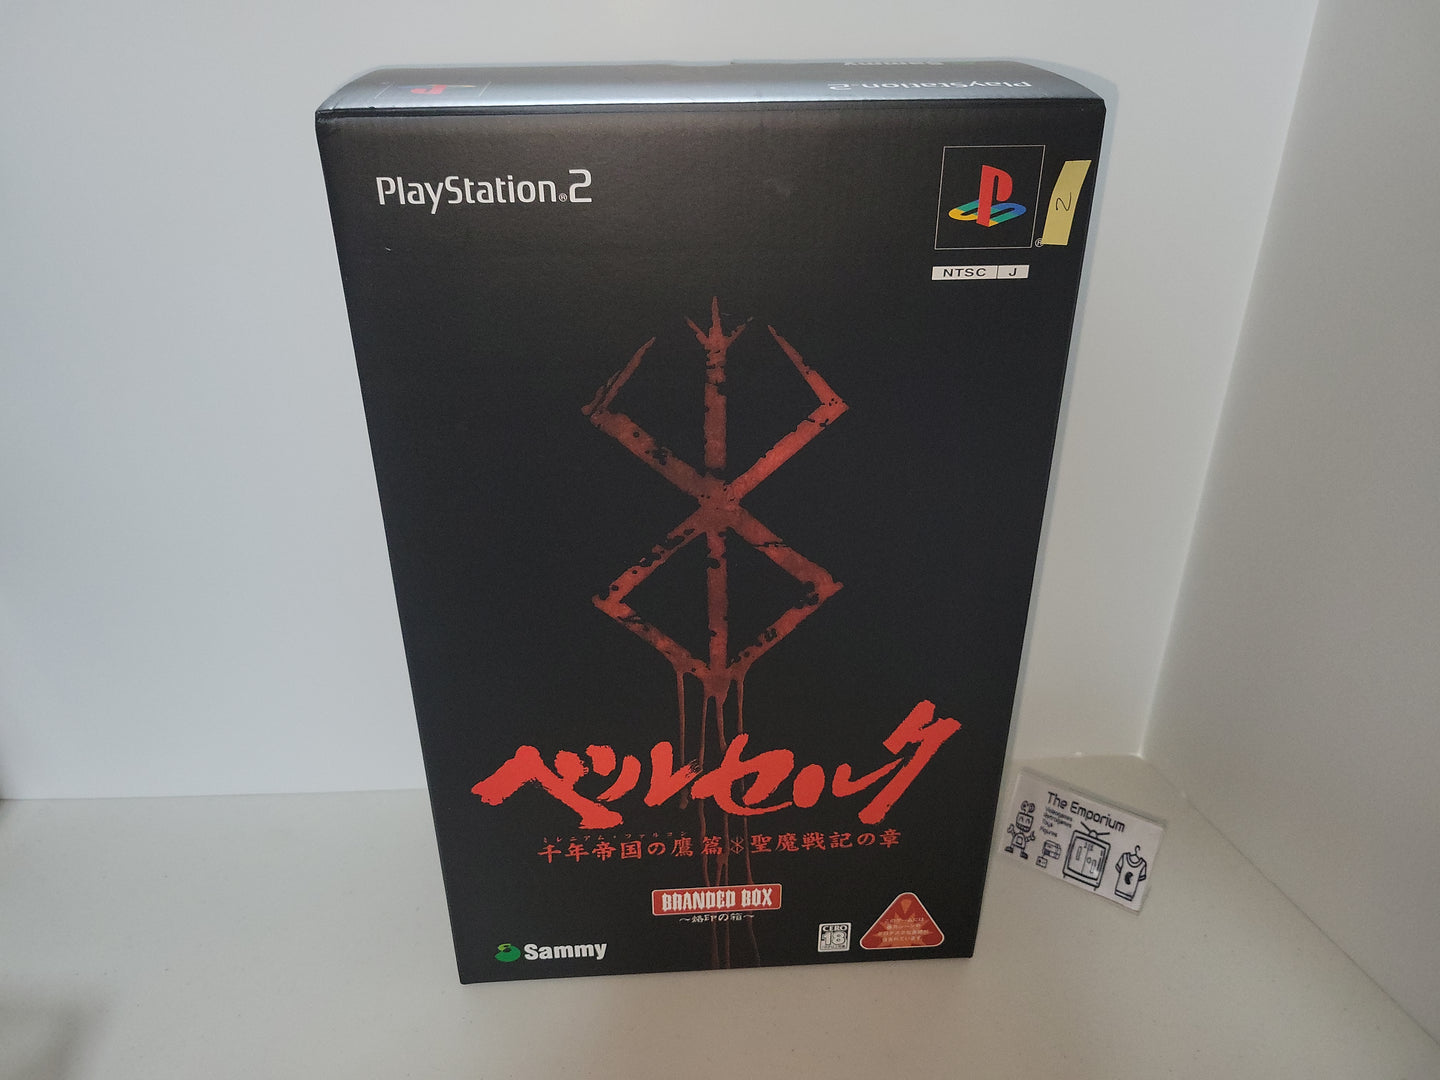 Berserk [Branded Box] + Preorder Bonus - Sony playstation 2